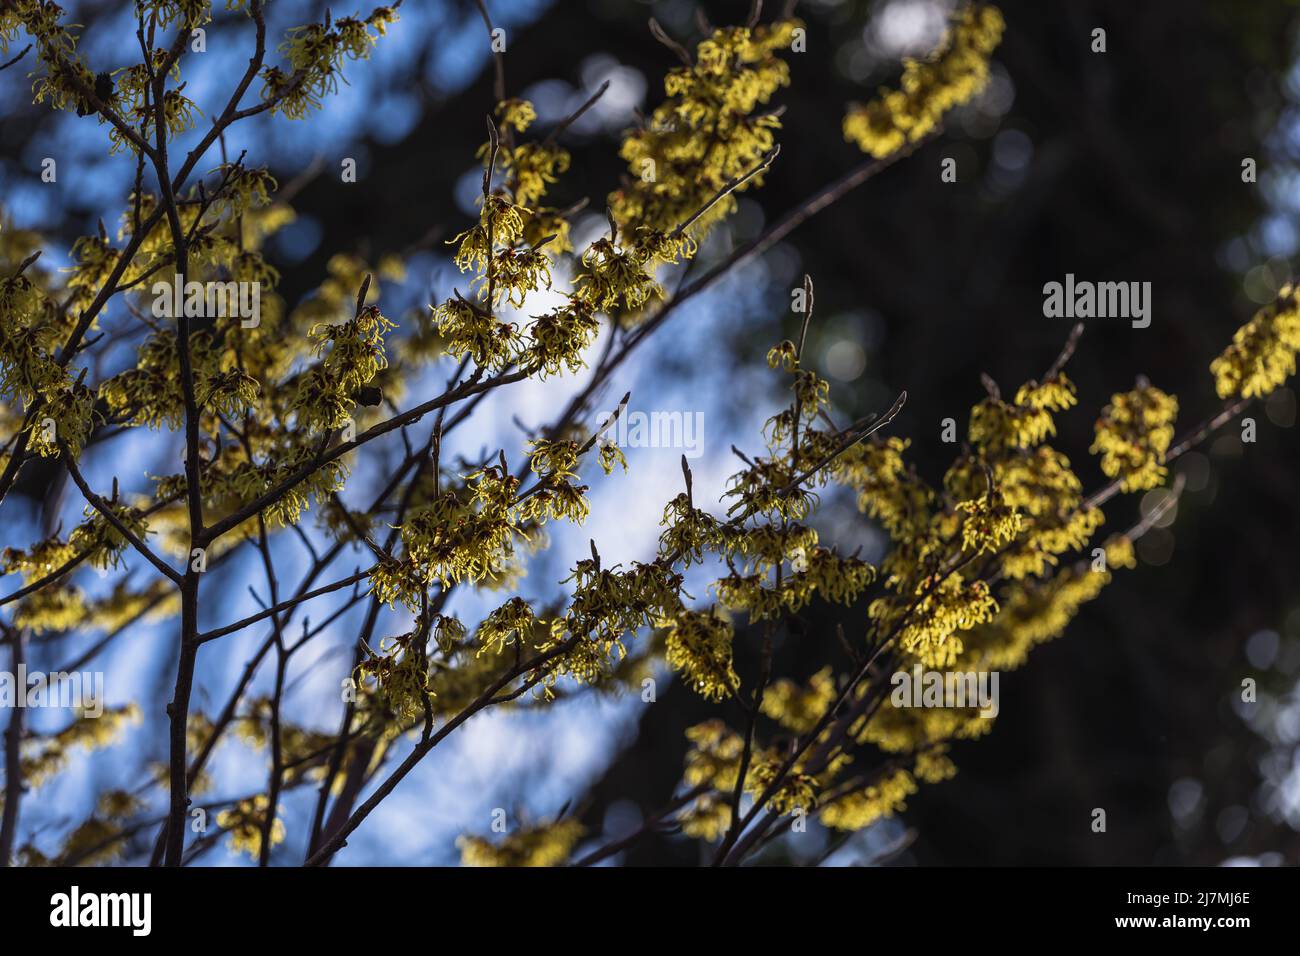 Vibrant yellow flowering stems of Hamamelis x intermedia 'Arnold Promise' / witch hazel, late winter Stock Photo